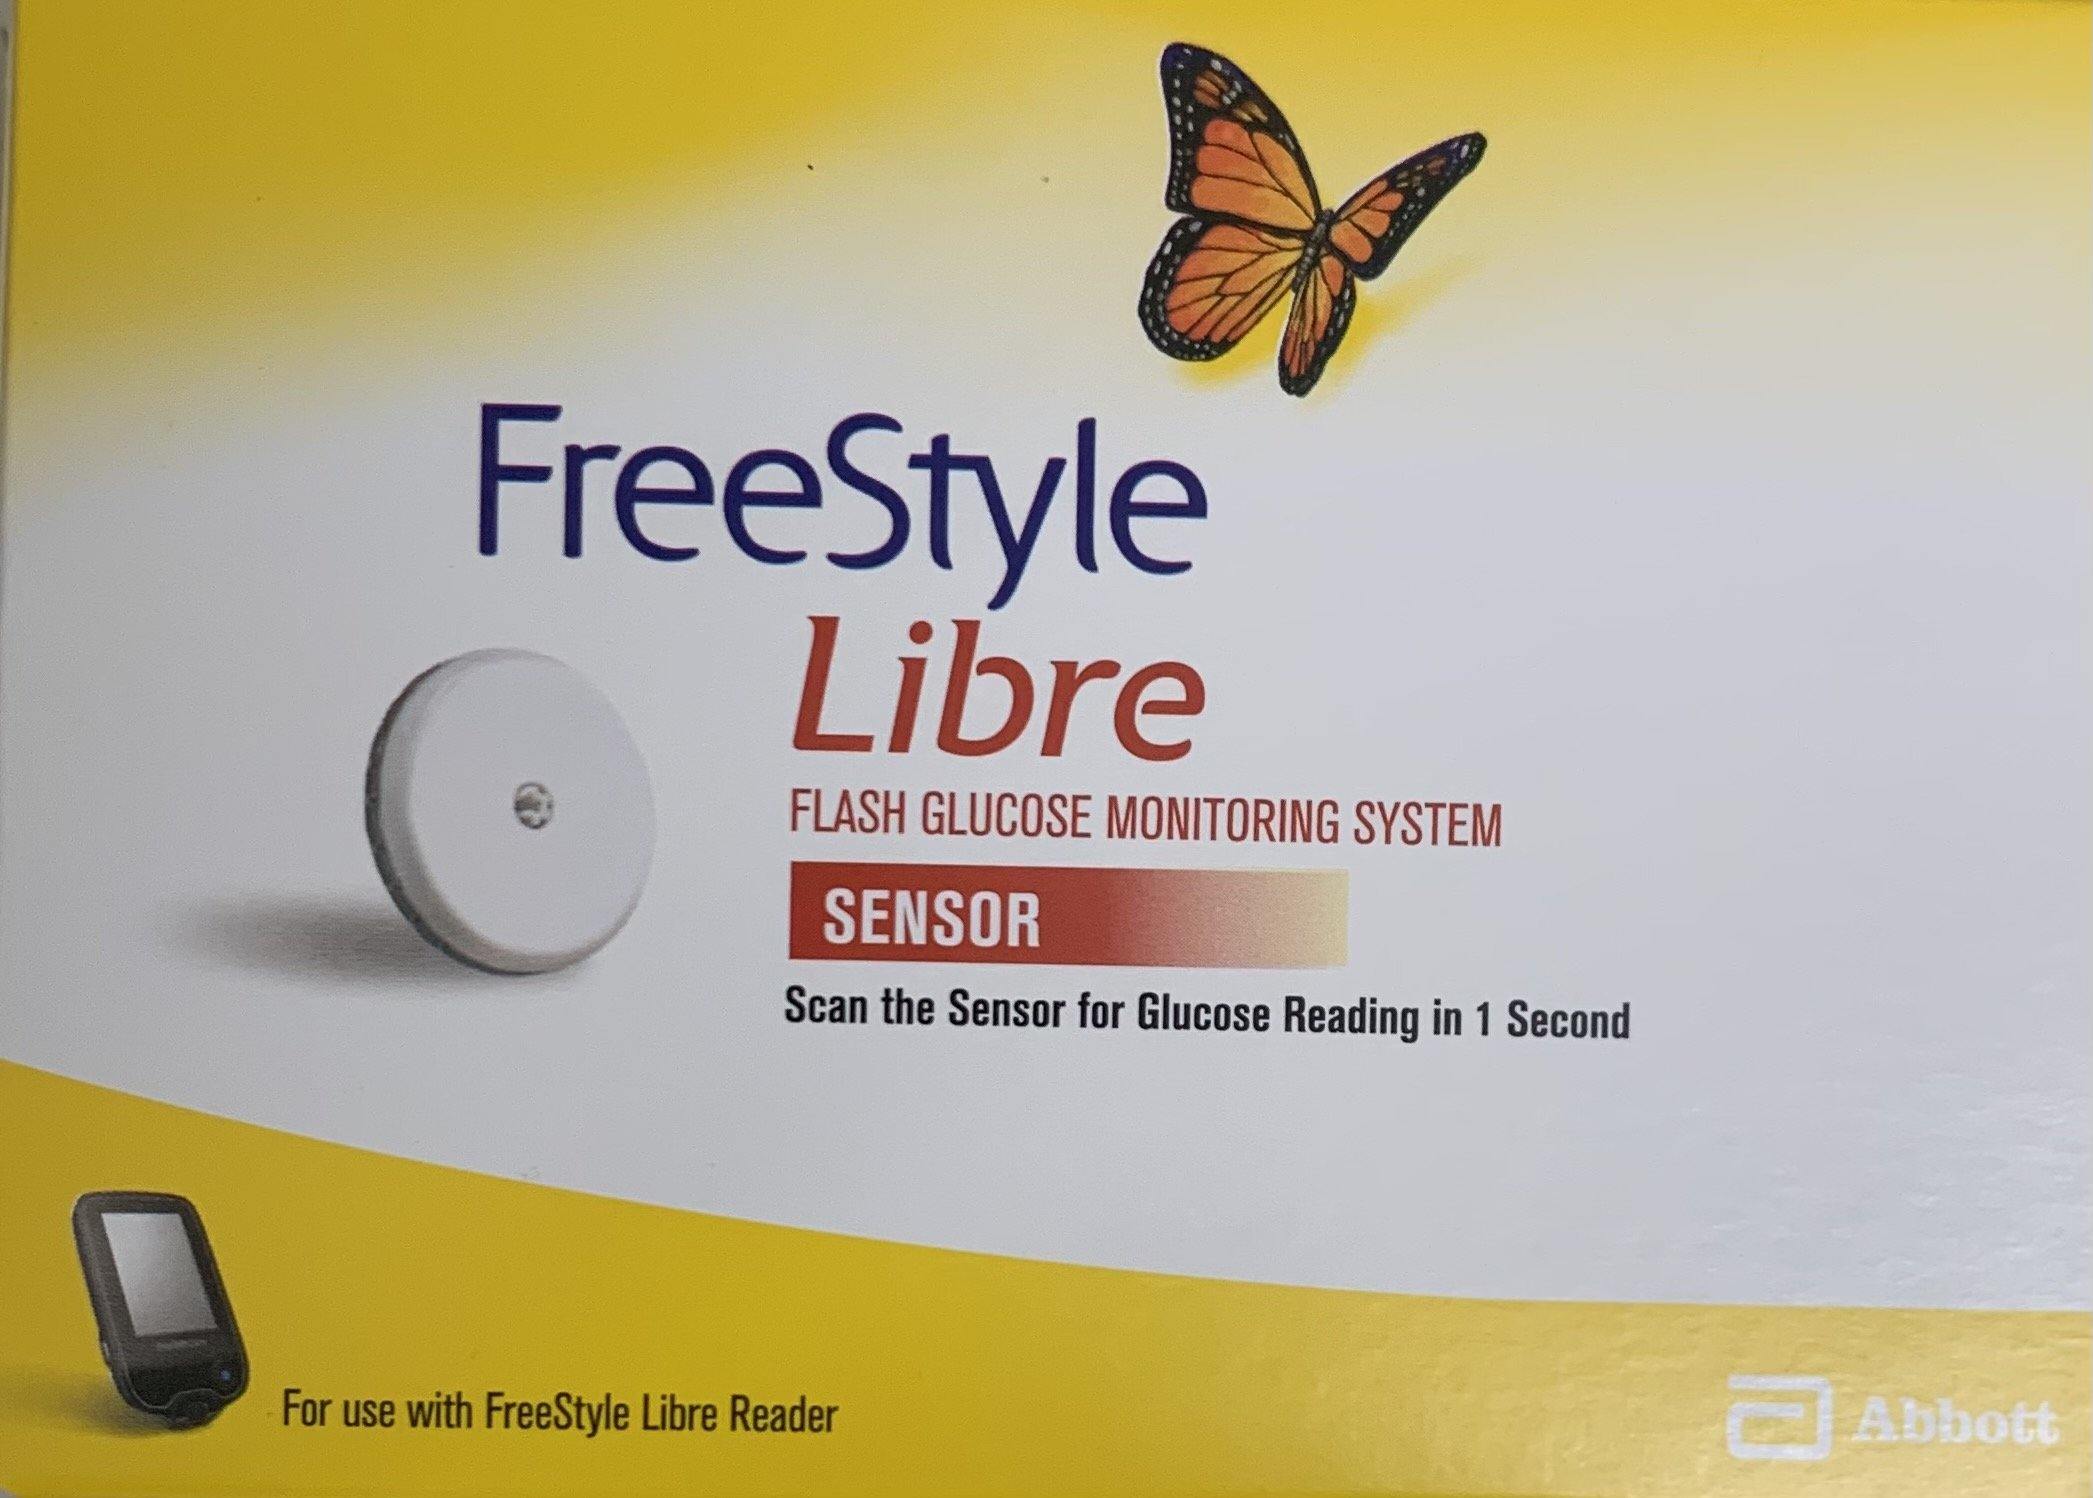 Flash мониторинг глюкозы freestyle libre